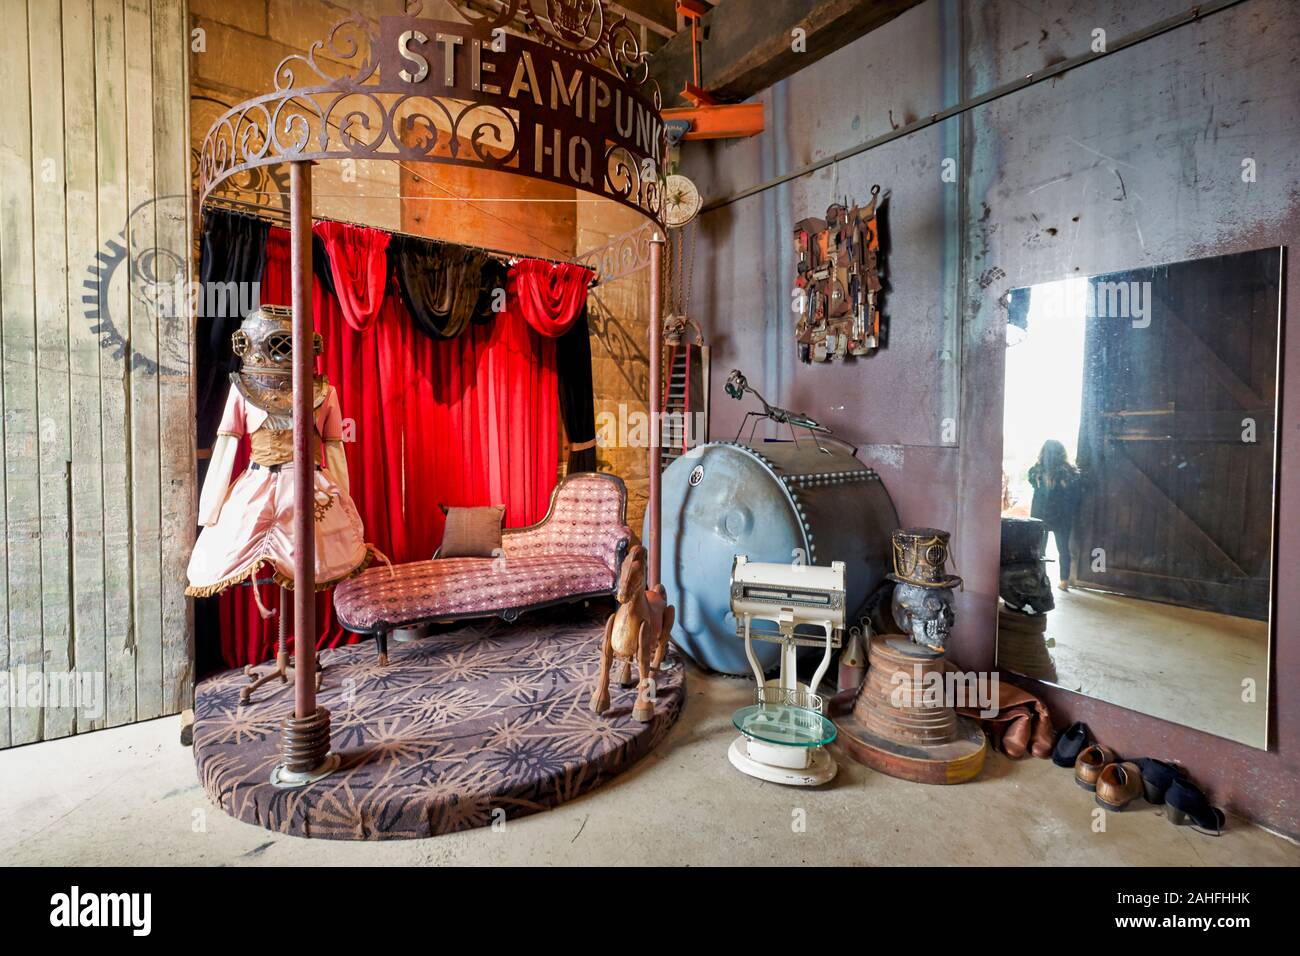 Steampunk HQ Art gallery. Oamaru New Zealand Stock Photo